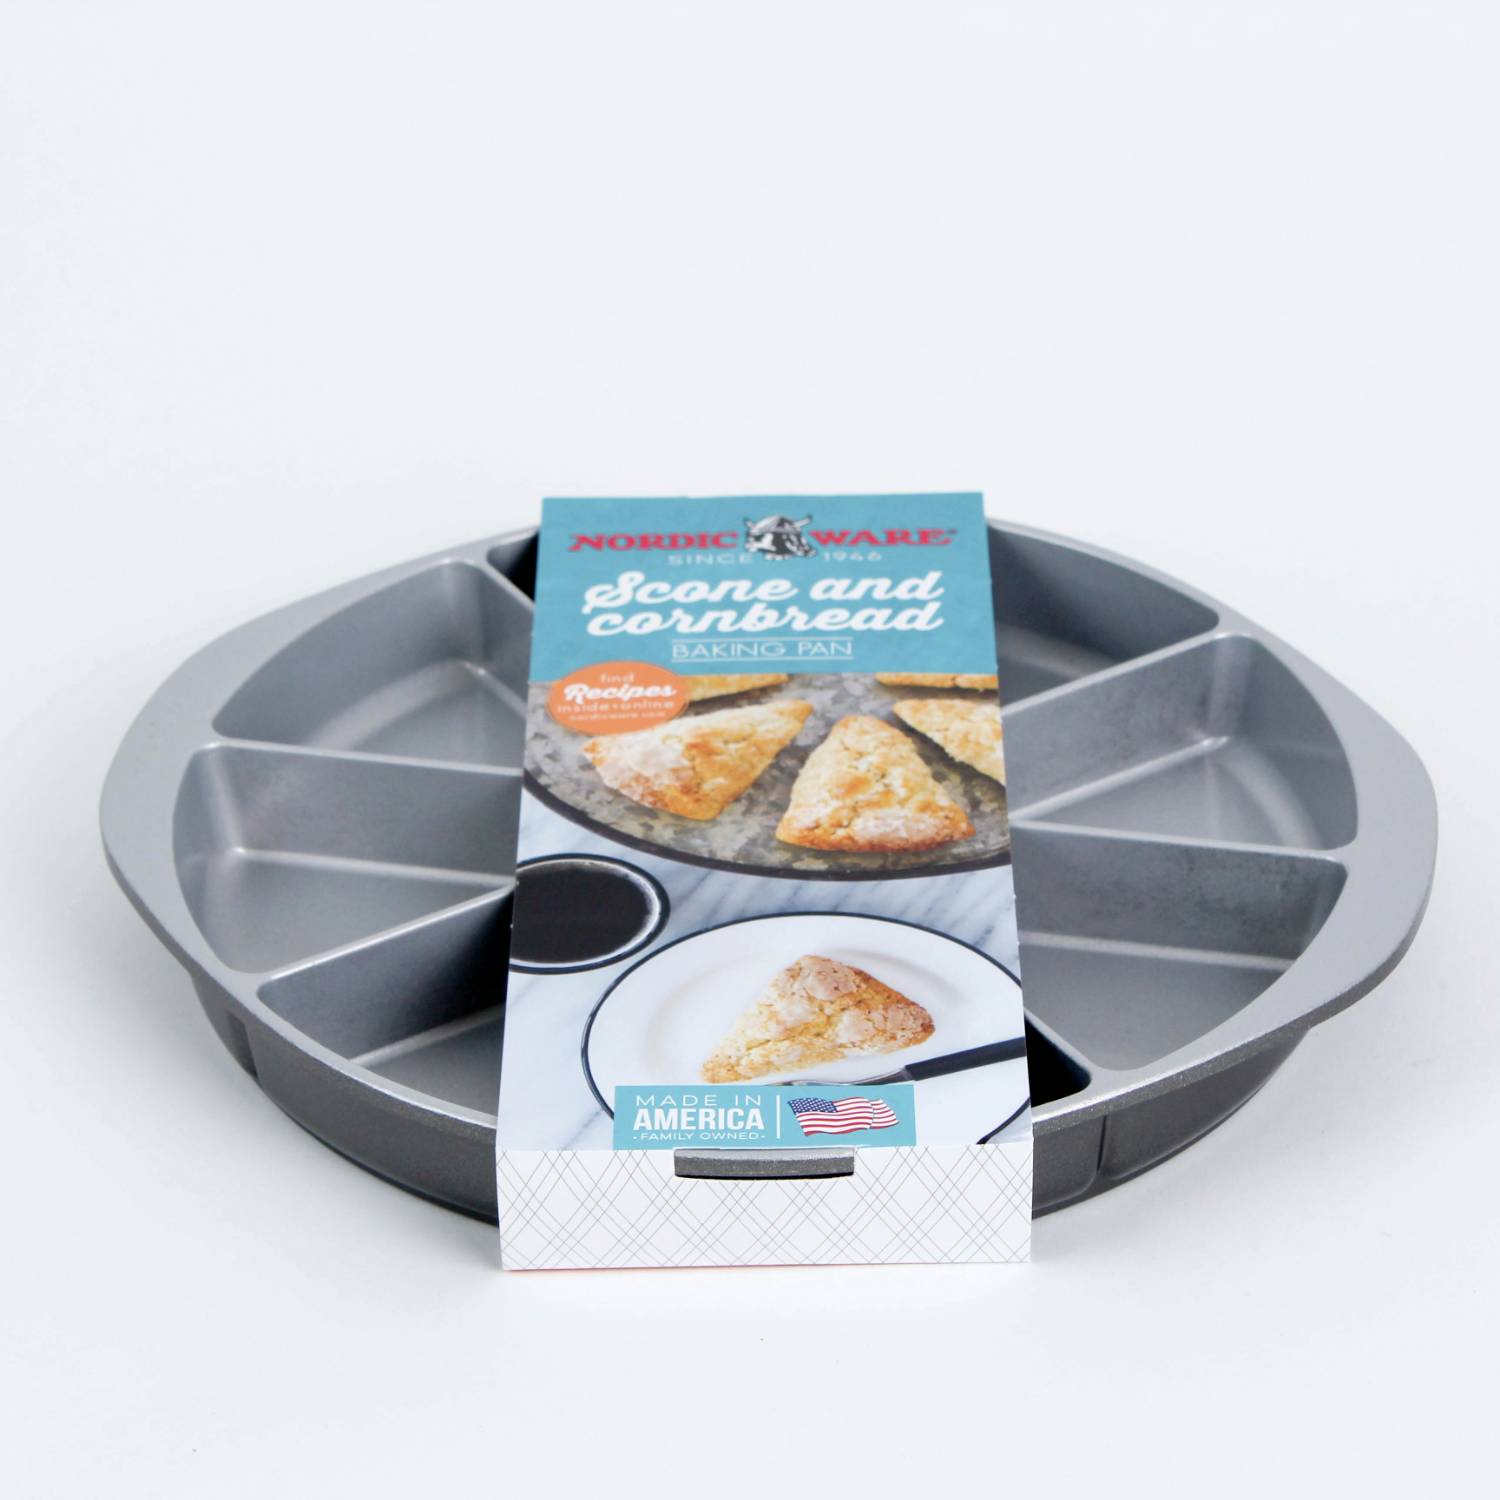 Nordic Ware Scone And Cornbread Baking Pan, 1.0 CT